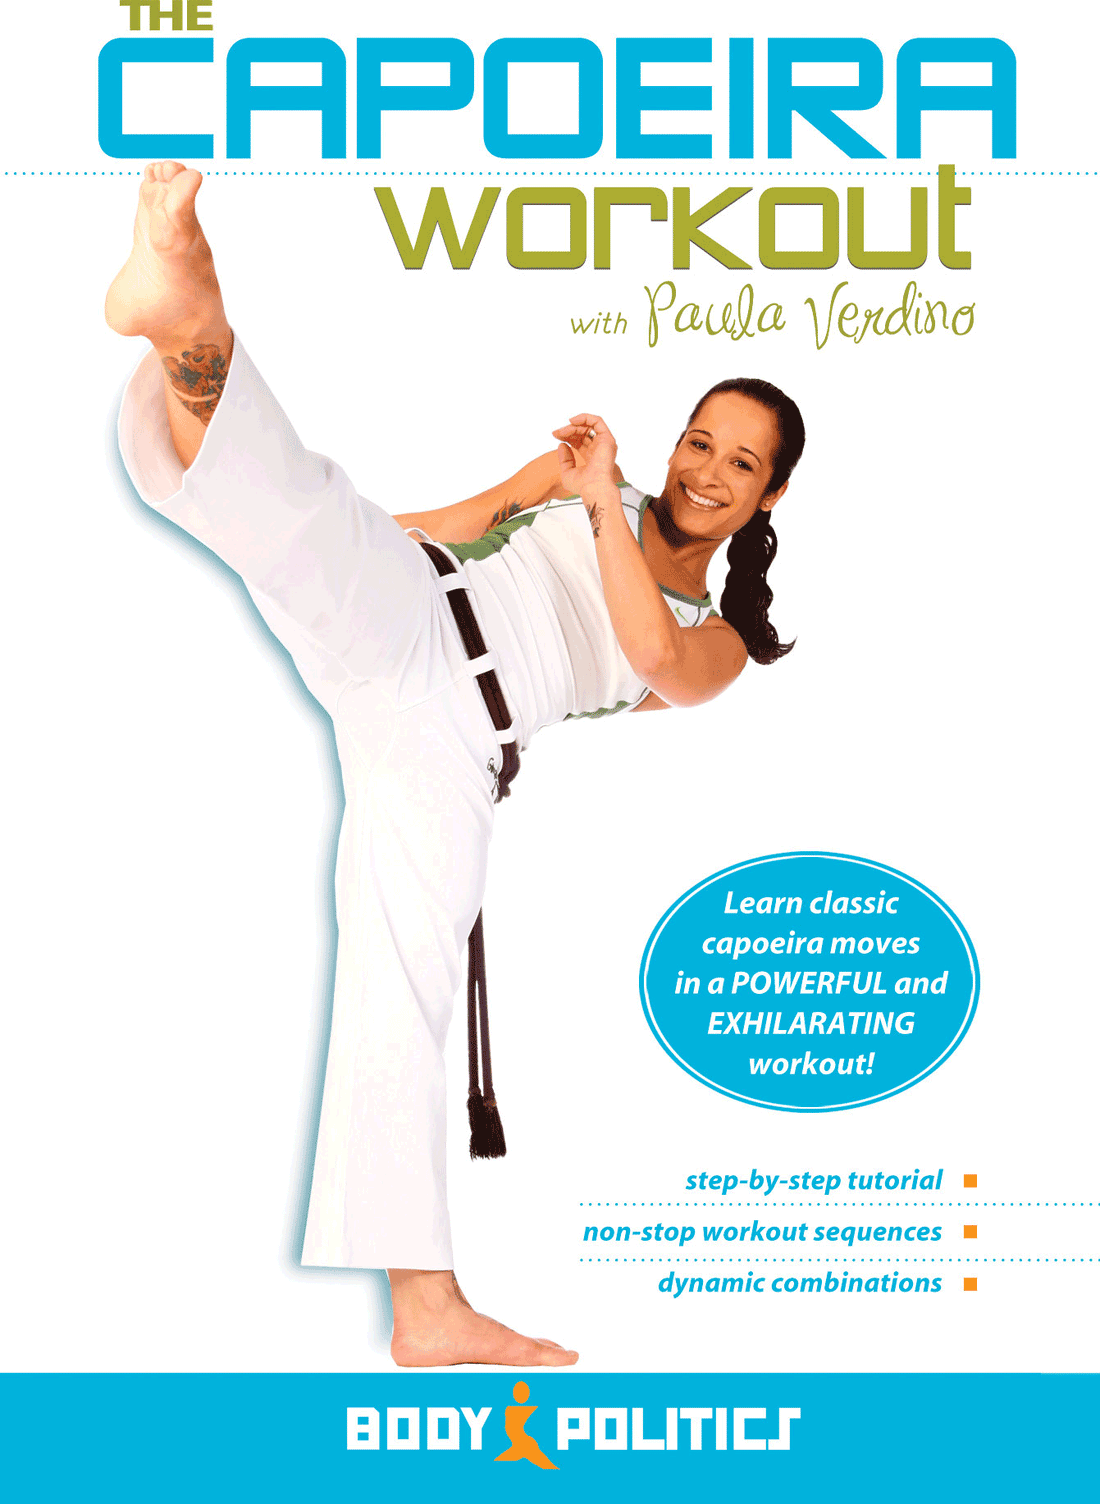 The Capoeira Workout, with Paula Verdino  - INSTANT VIDEO / DVD - World Dance New York